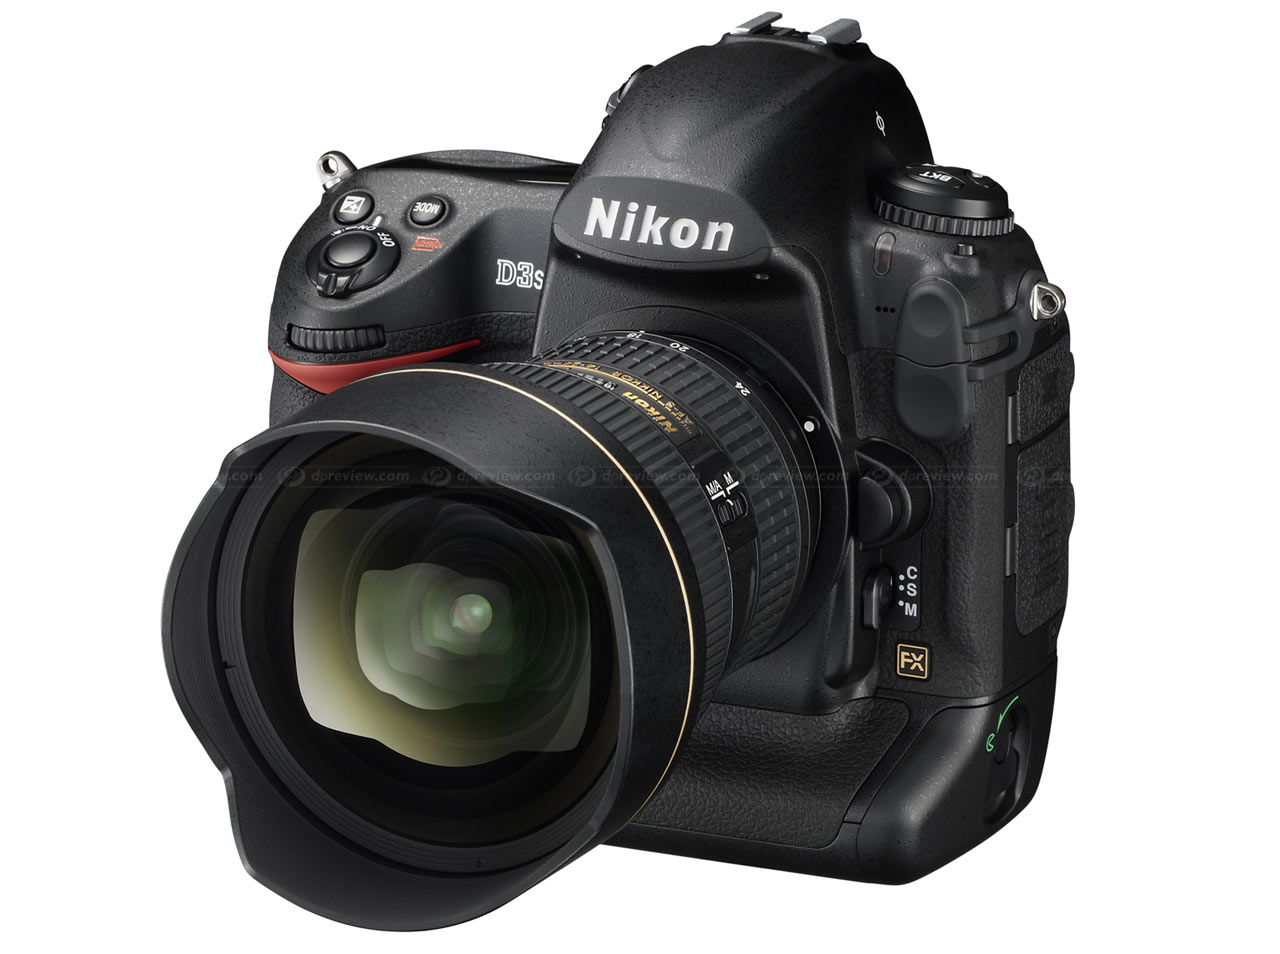 دوربين عكاسی ديجيتال نيكون-Nikon ds3*